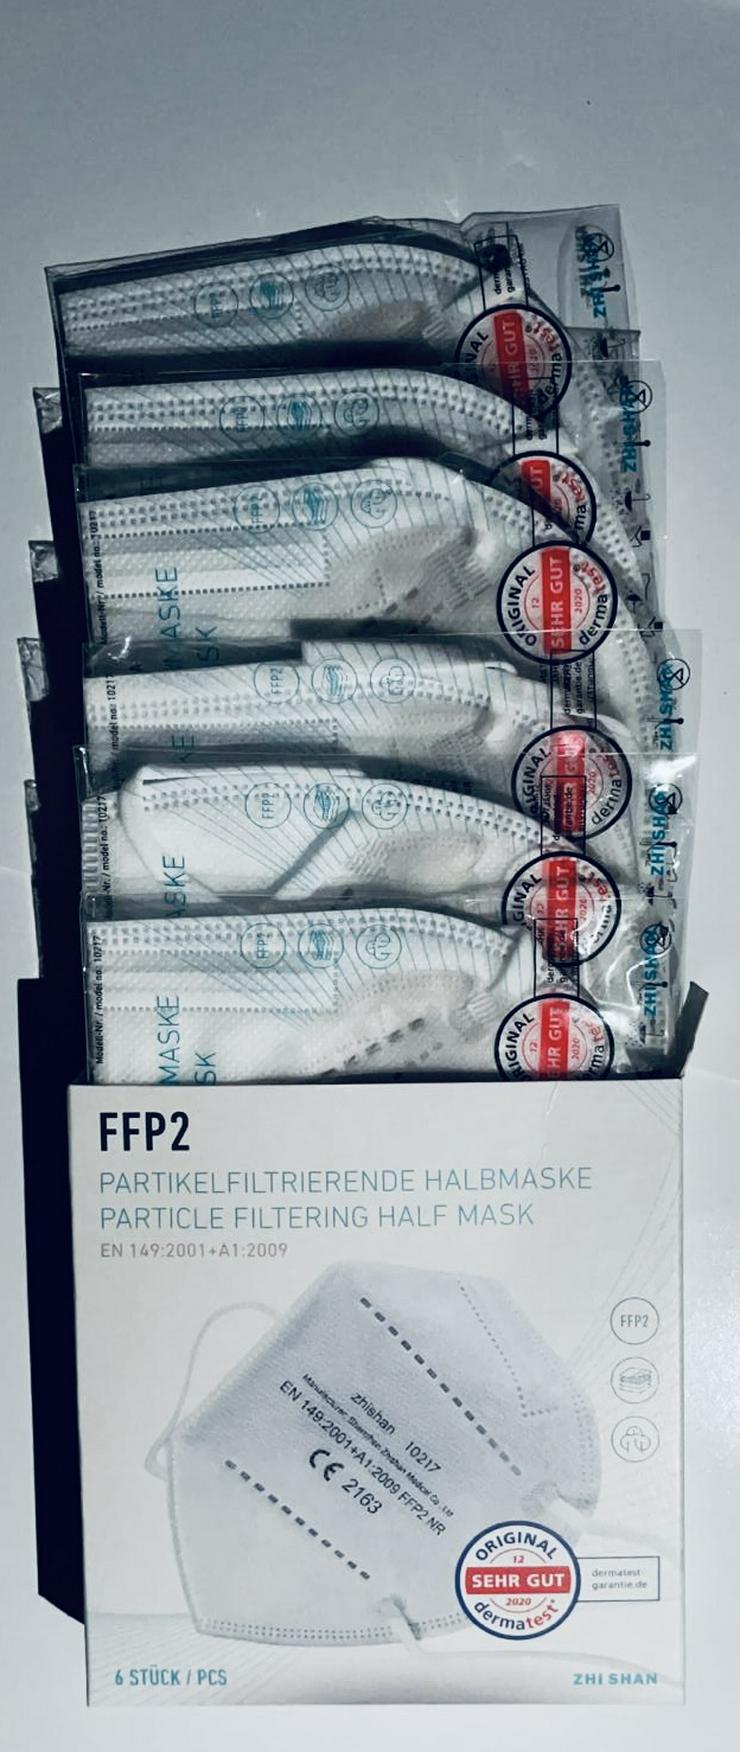 ab 0,36€ ✅6 er Pack✅ TÜV Rheinland ✅ FFP2 Maske Zhi Shan✅Zhishan - Gesundheitswesen - Bild 8